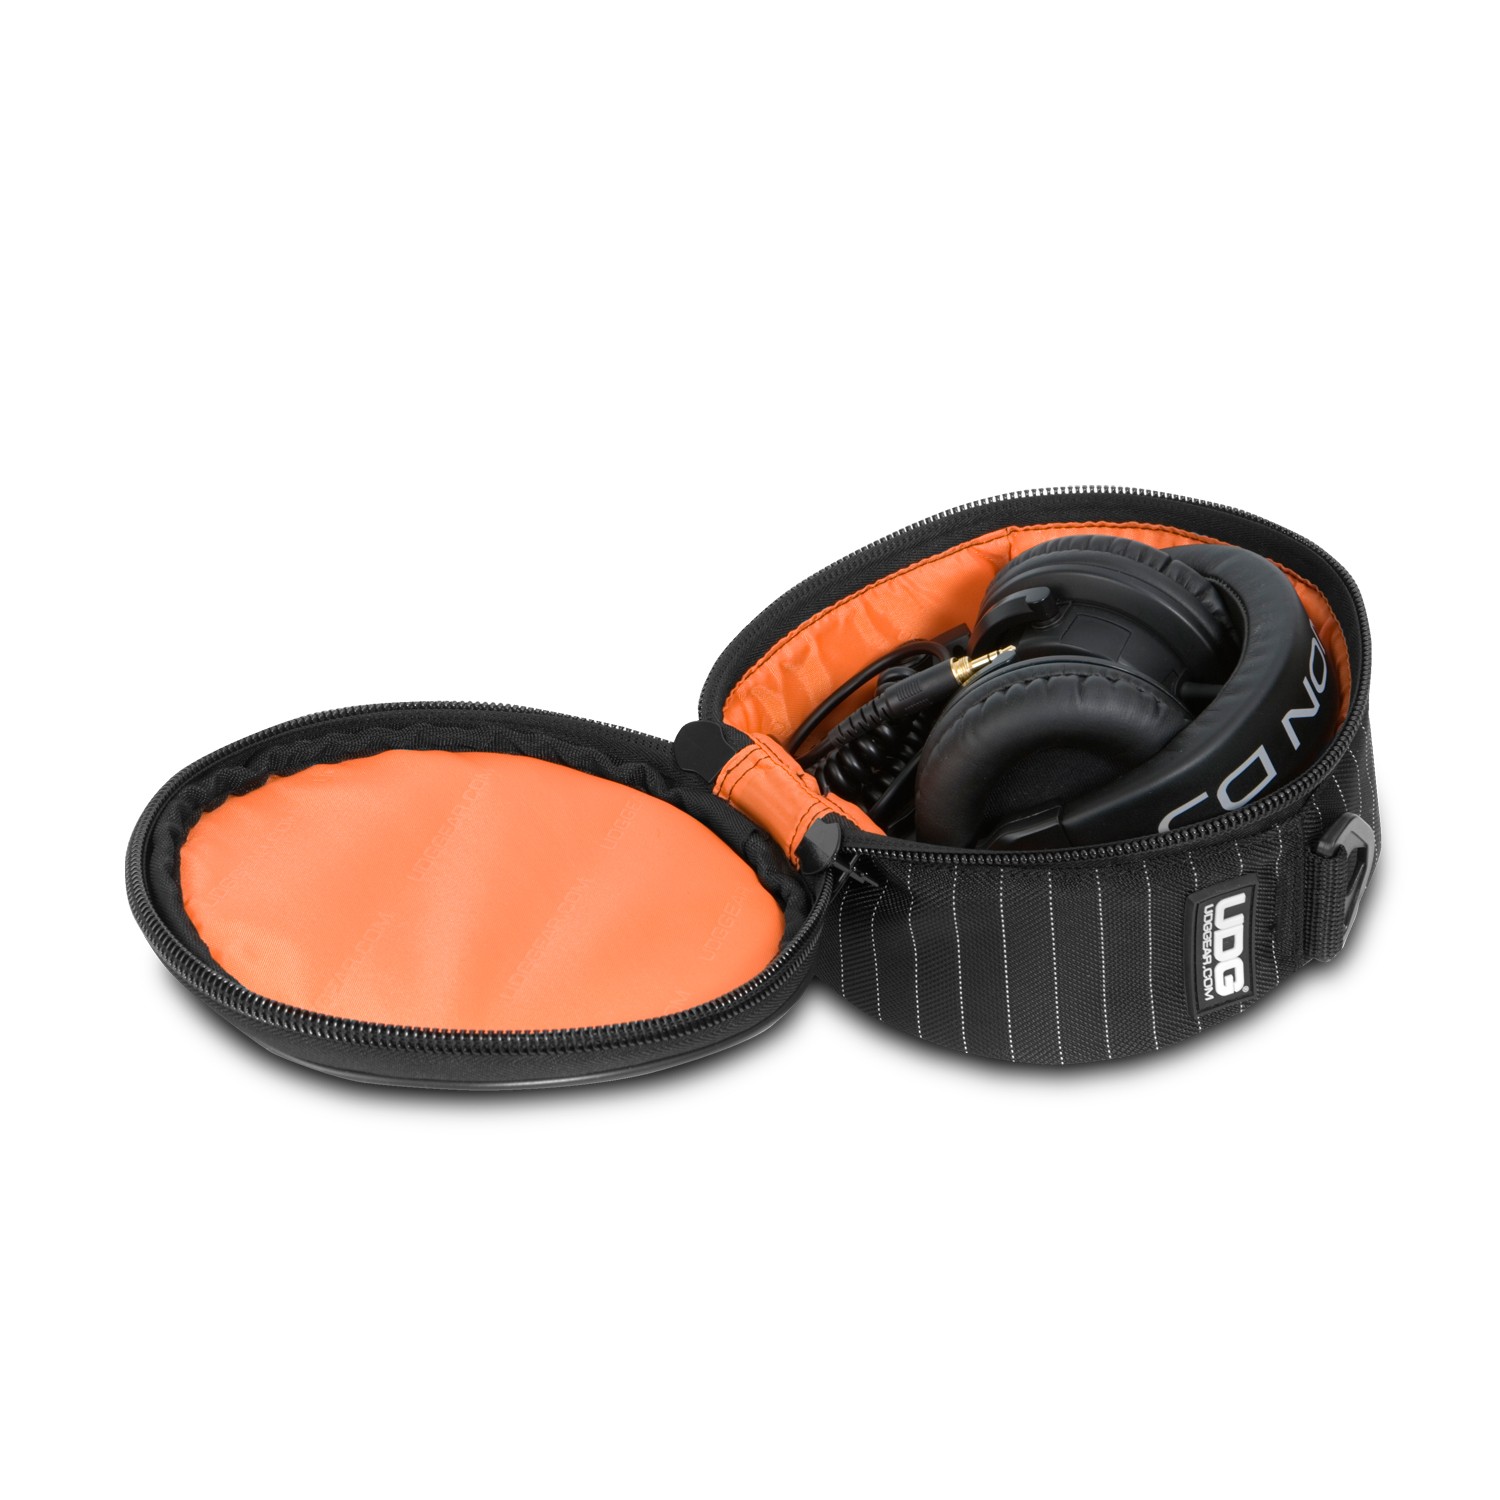 UDG Ultimate Headphone Bag Black/Grey Stripe по цене 4 320.00 ₽